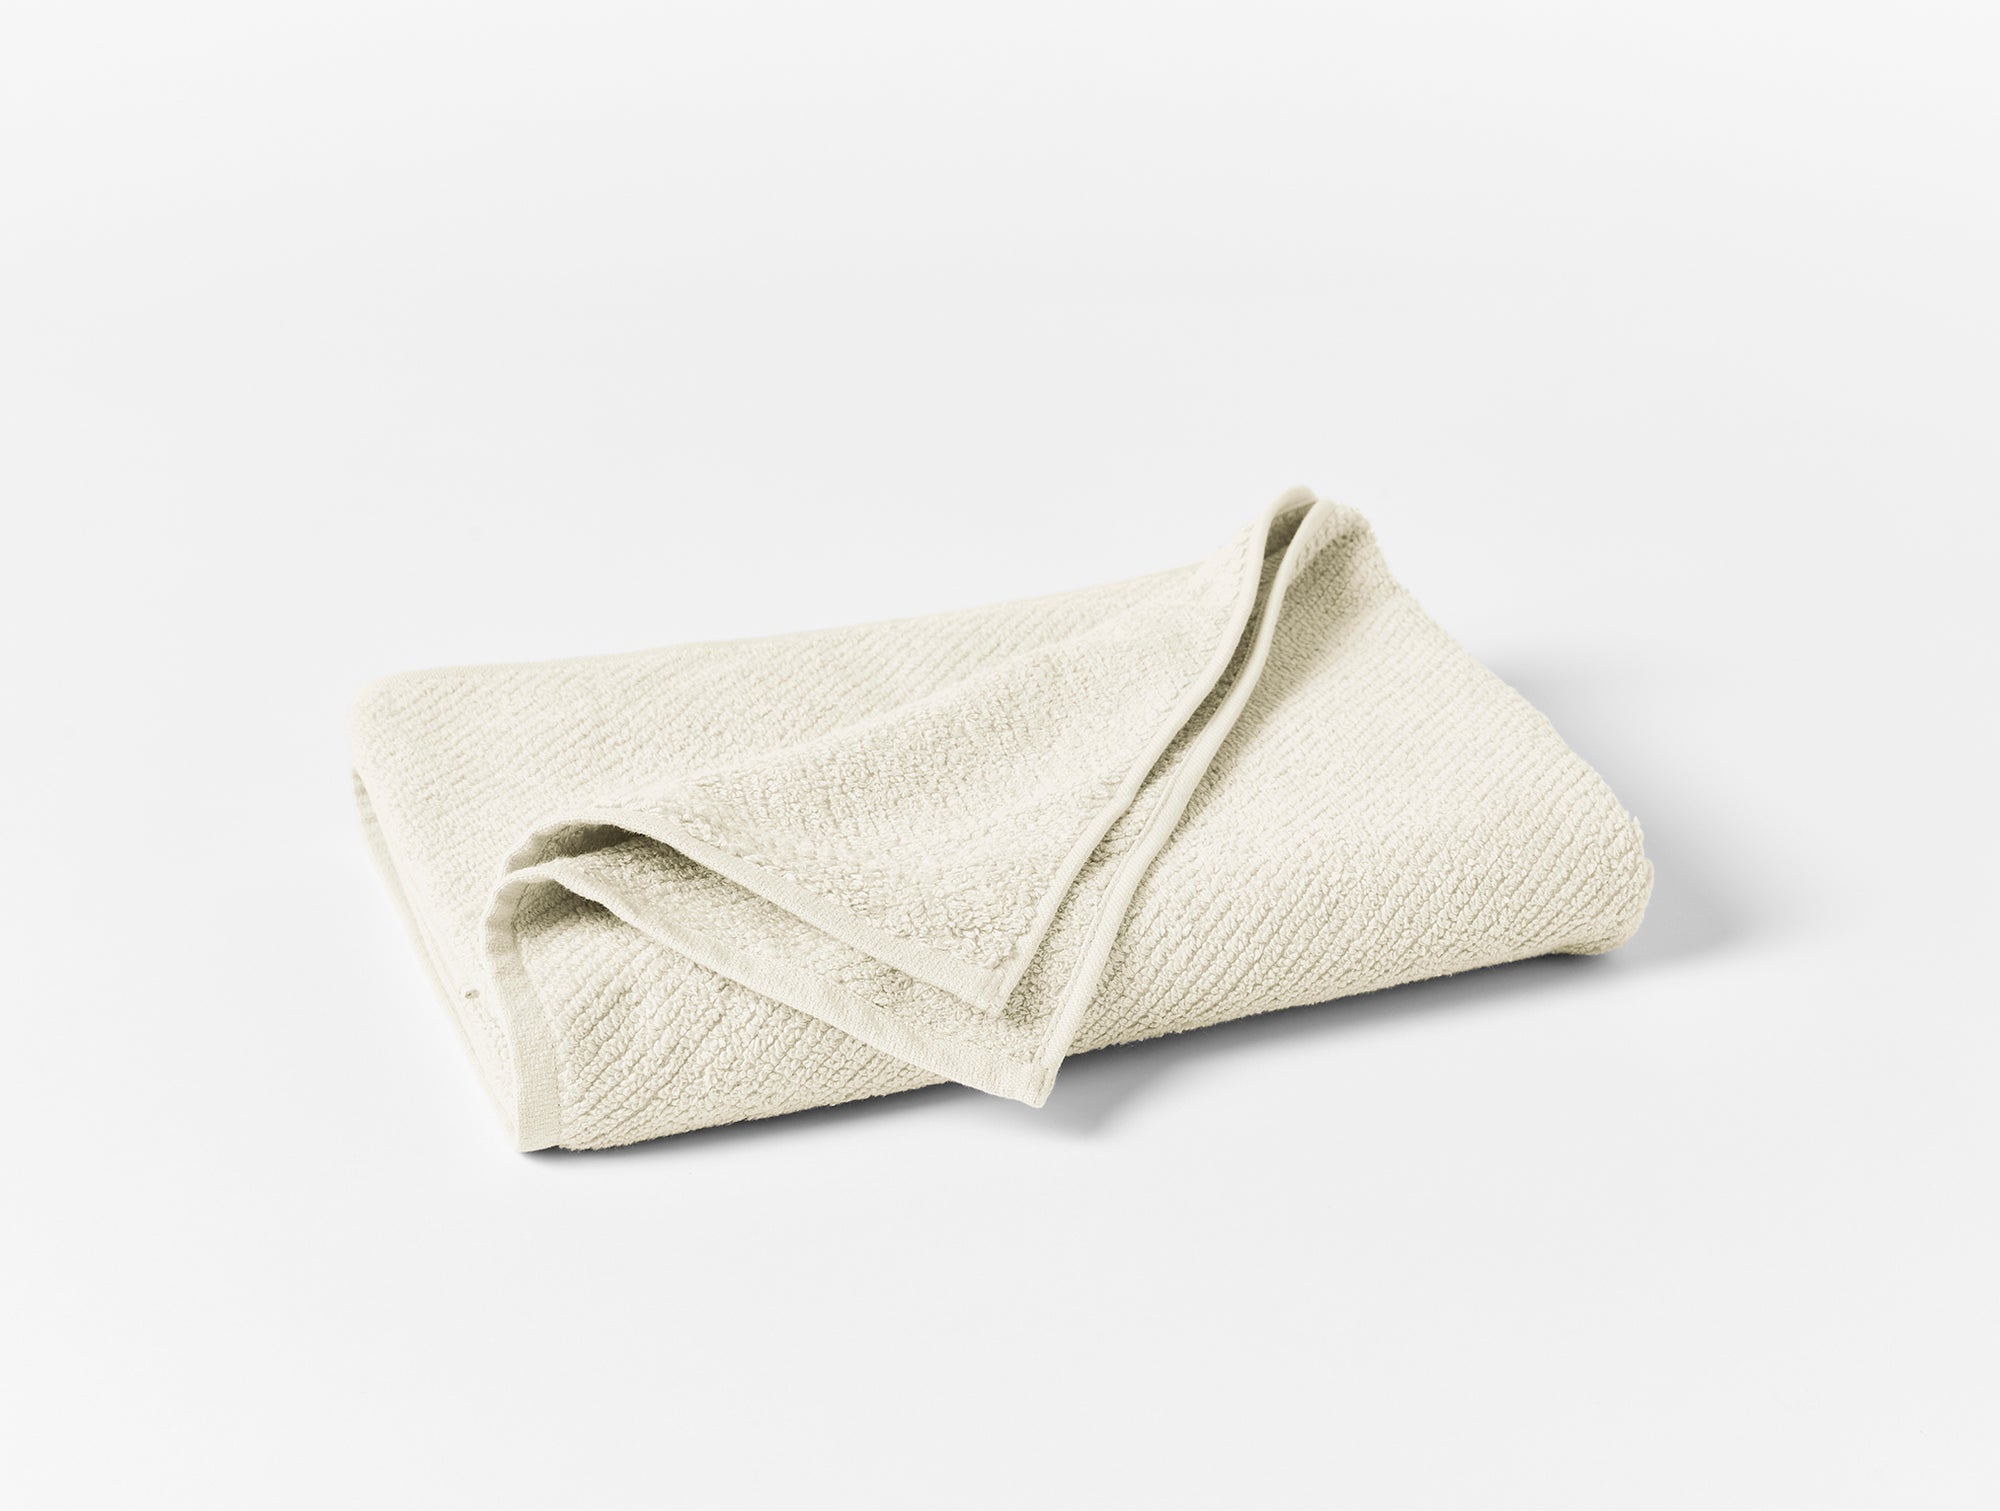 Everlasting Beauty of Linen Bath Towels